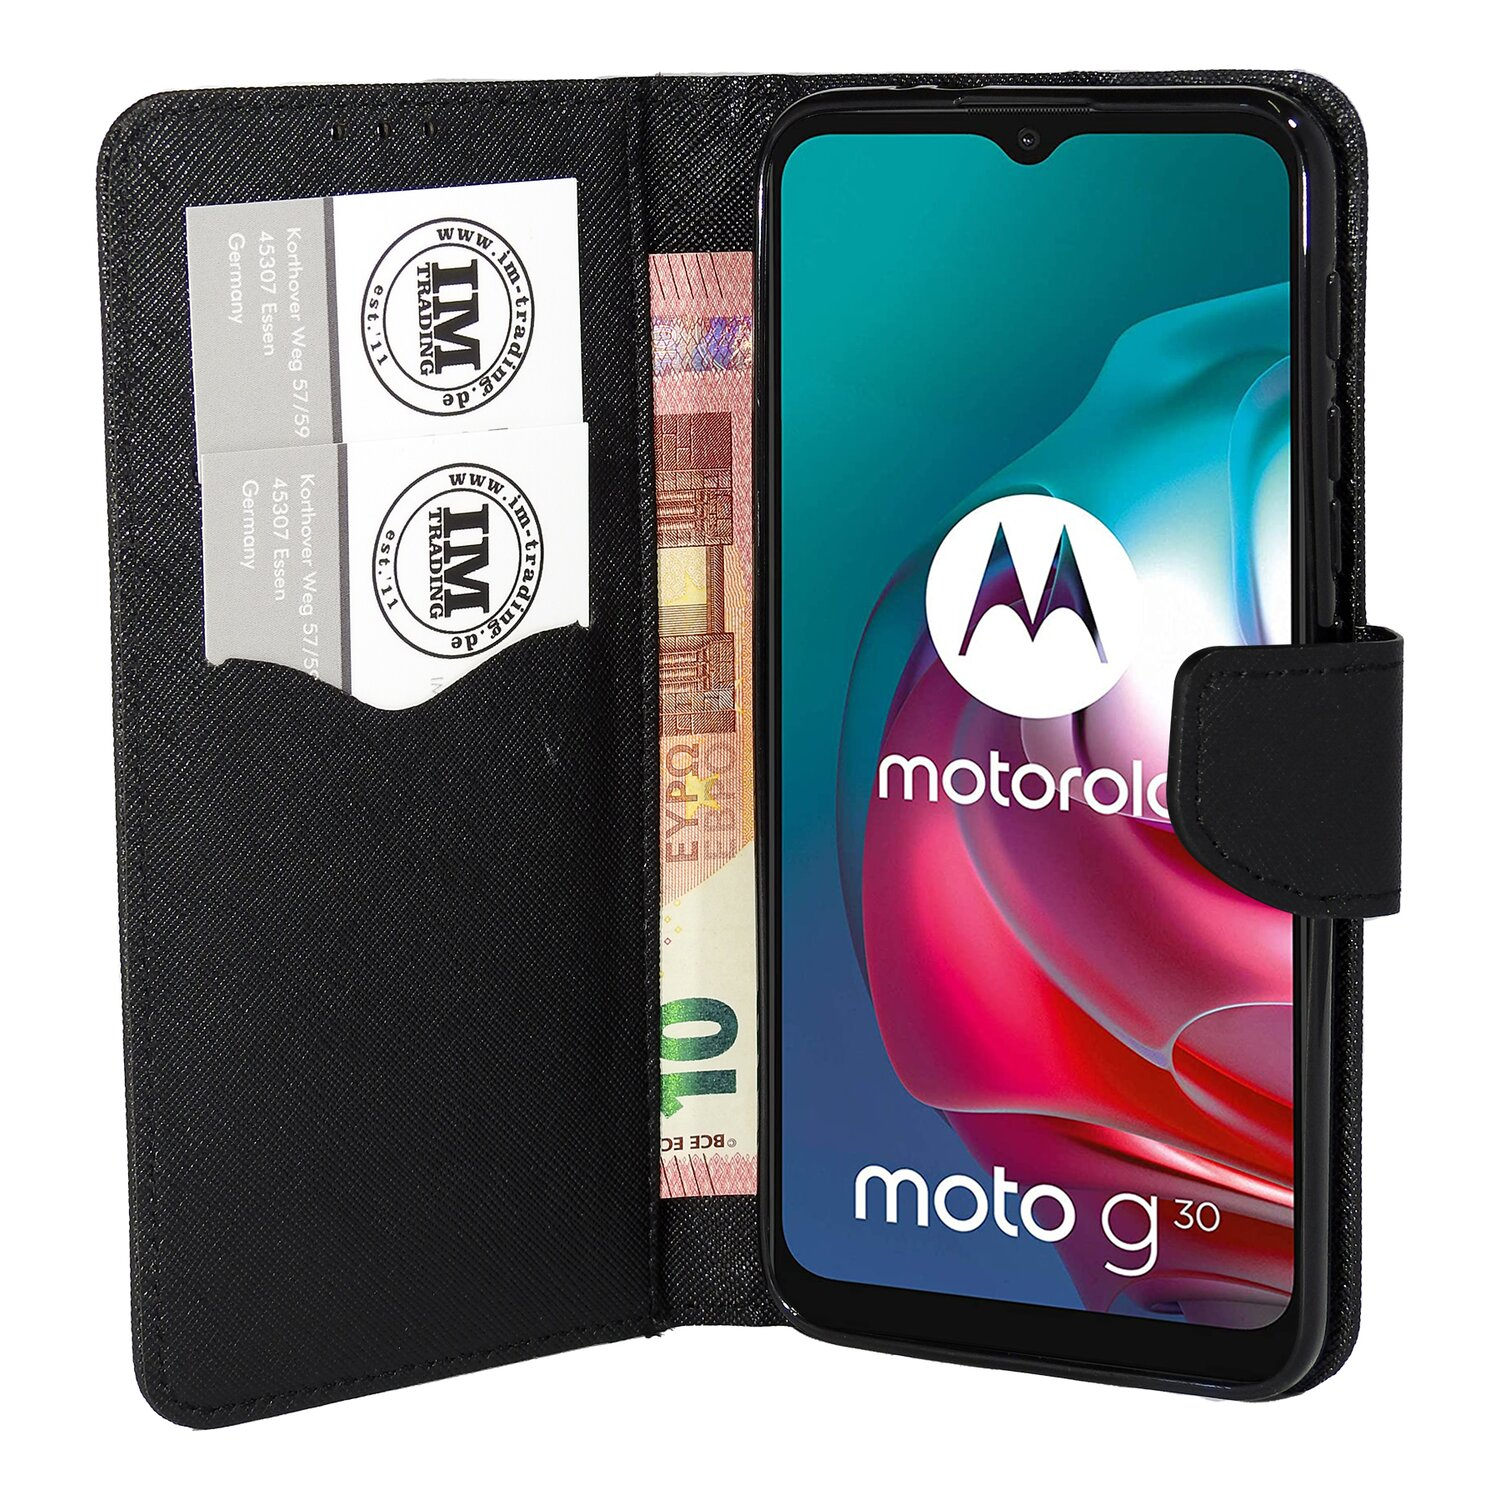 COFI Buch MOTO Bookcover, Motorola, Schwarz Tasche, G30